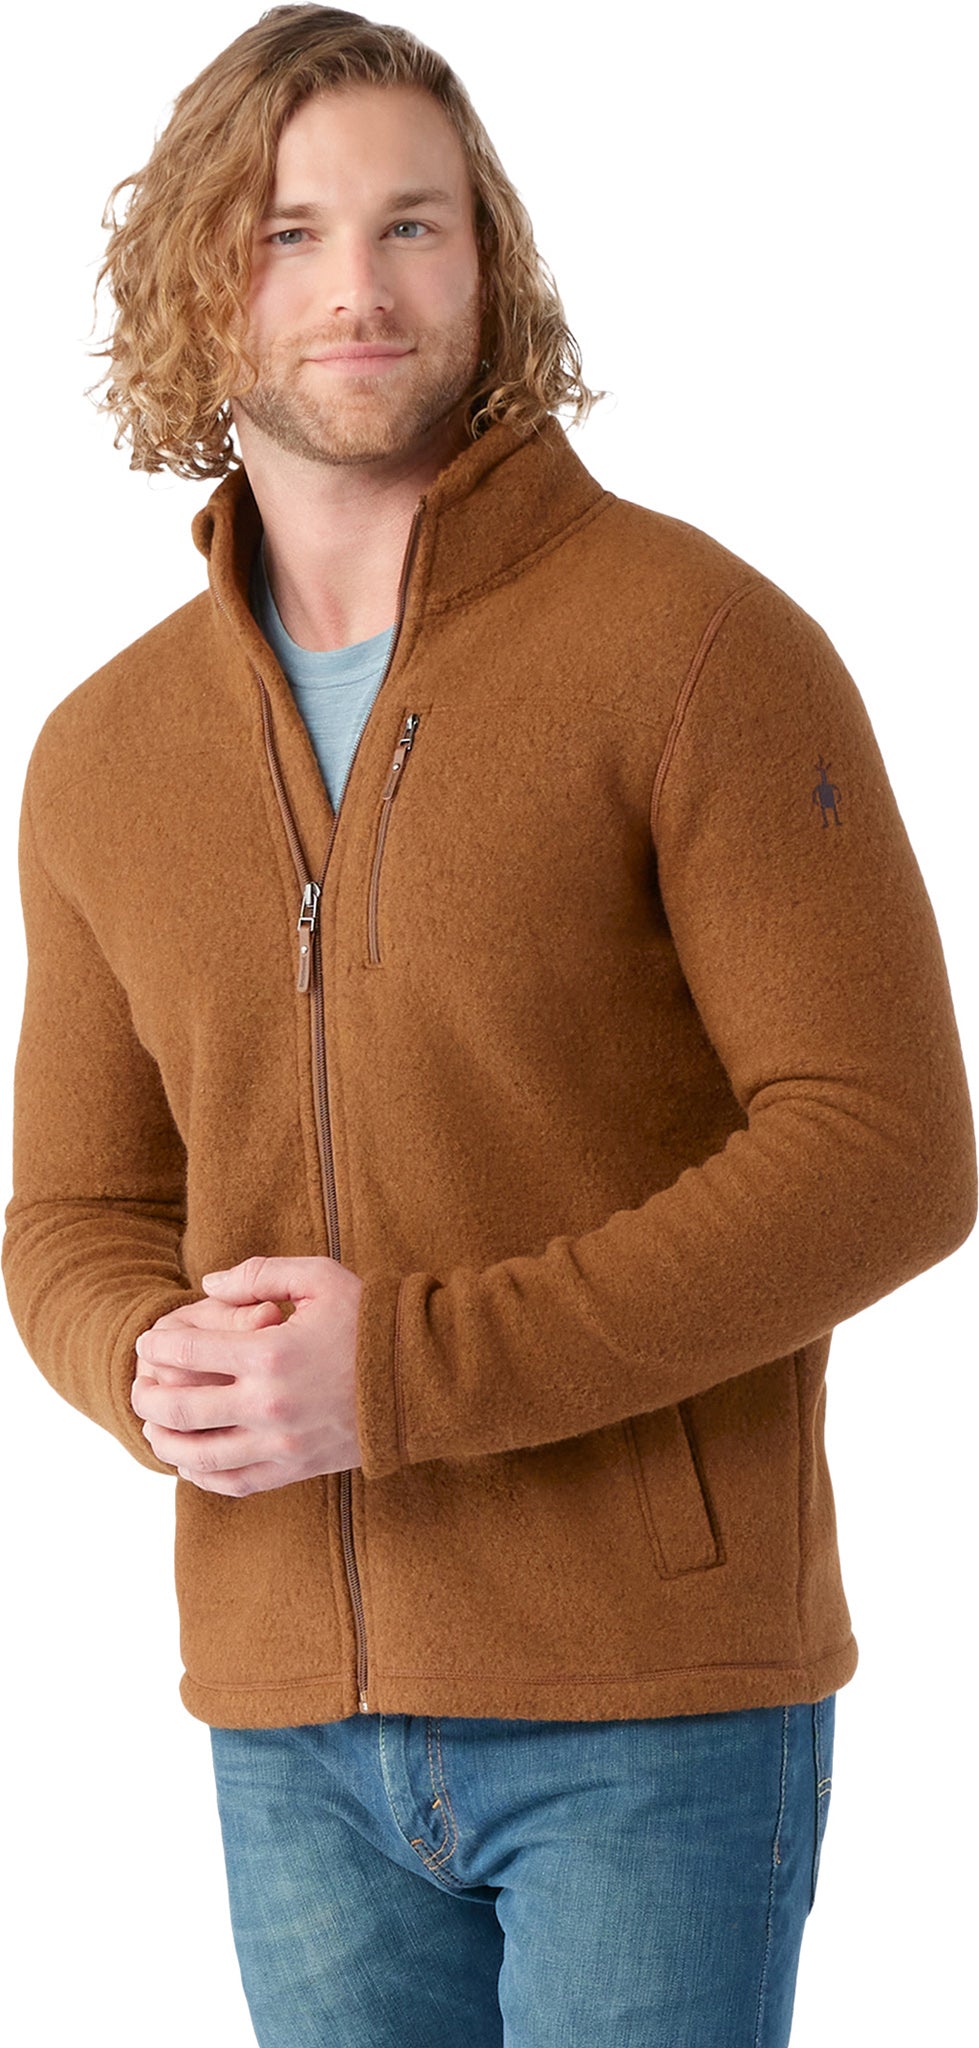 Smartwool Hudson Trail Full Zip Fleece Sweatshirt - Men's